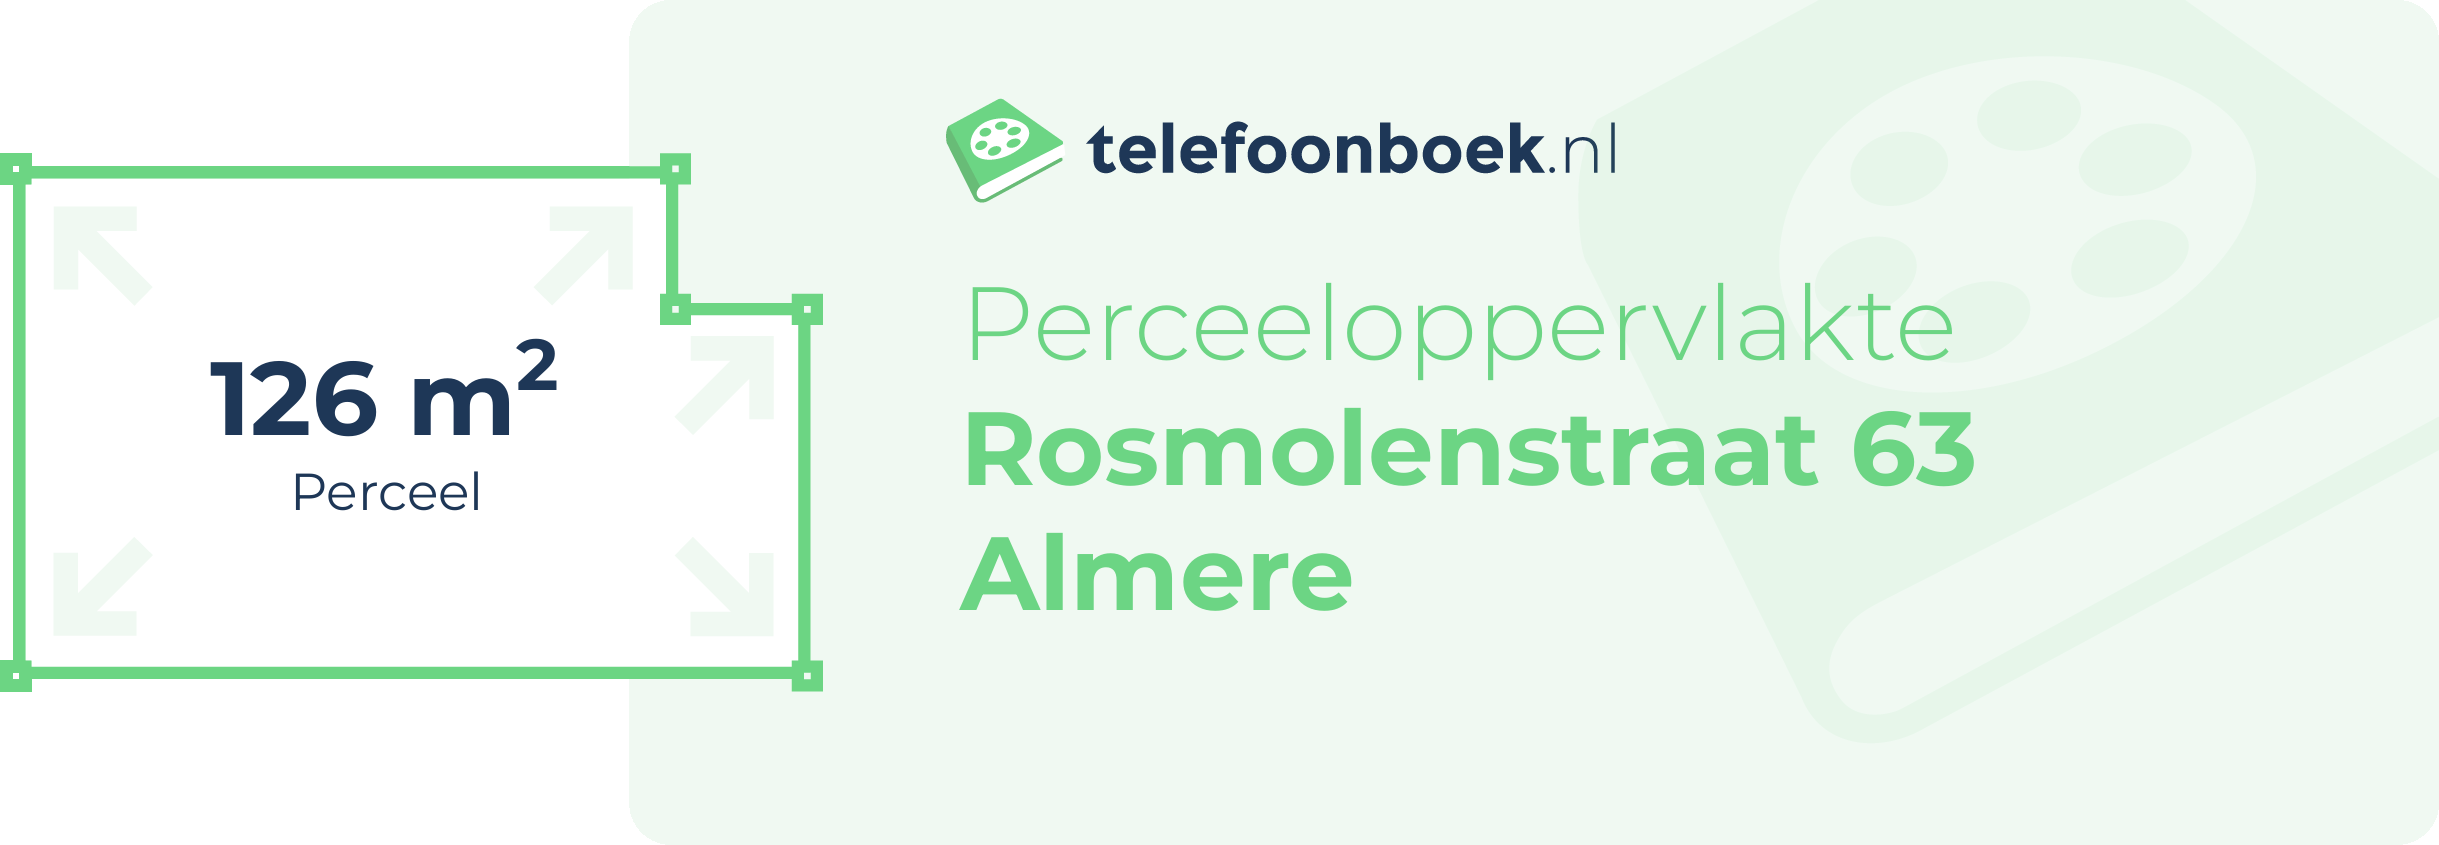 Perceeloppervlakte Rosmolenstraat 63 Almere